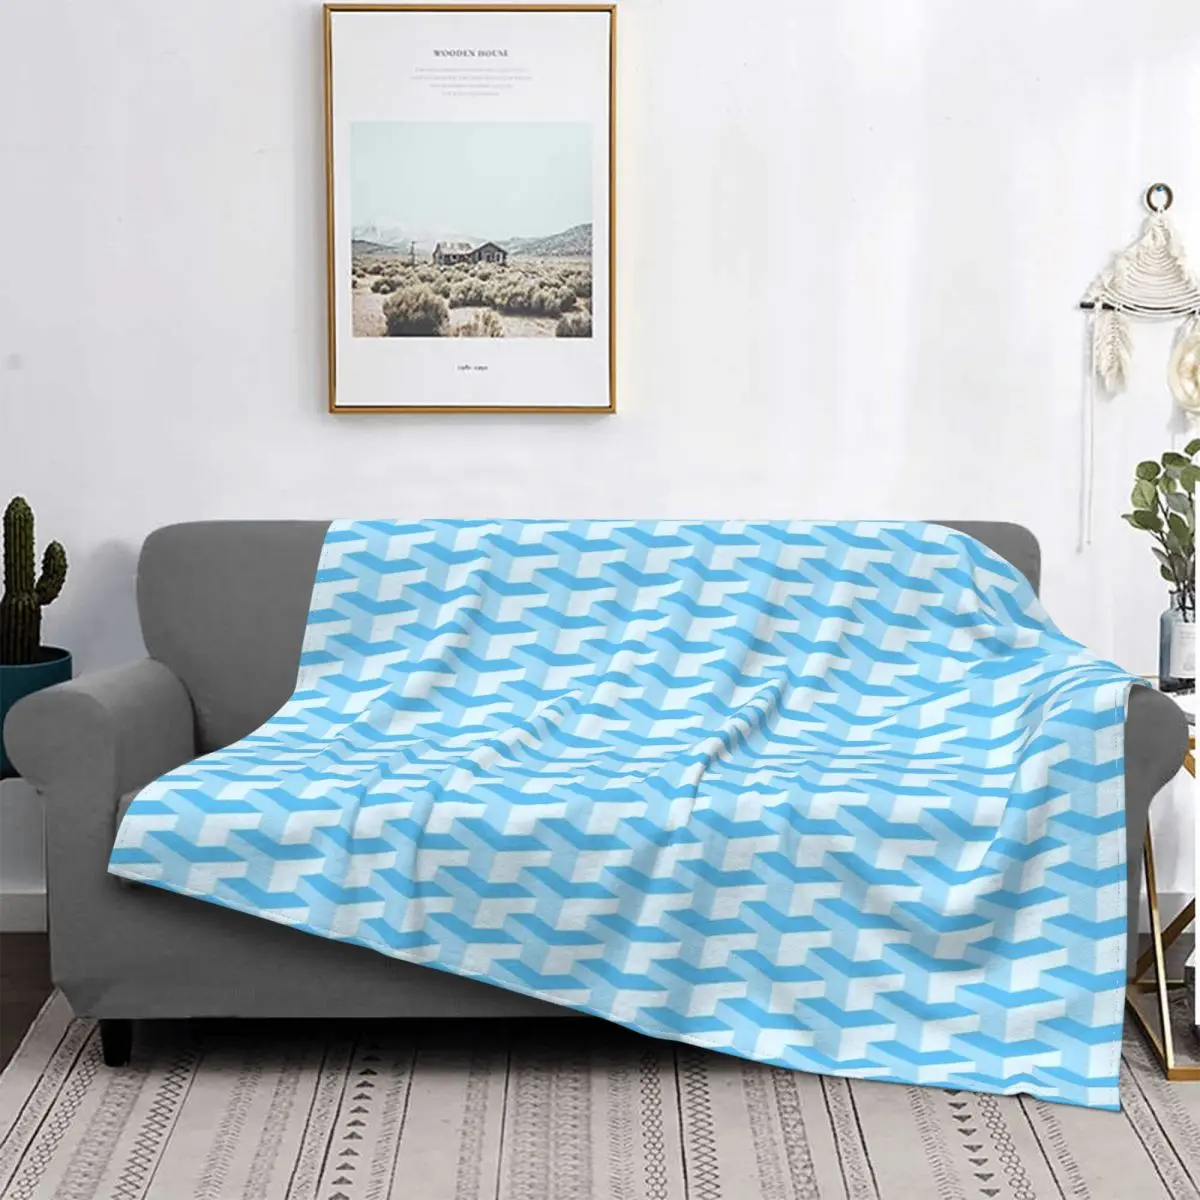 

Manta con patrón de cajas azules, colcha para cama, alfombra a cuadros, manta de playa, manta de lana, colchas para camas